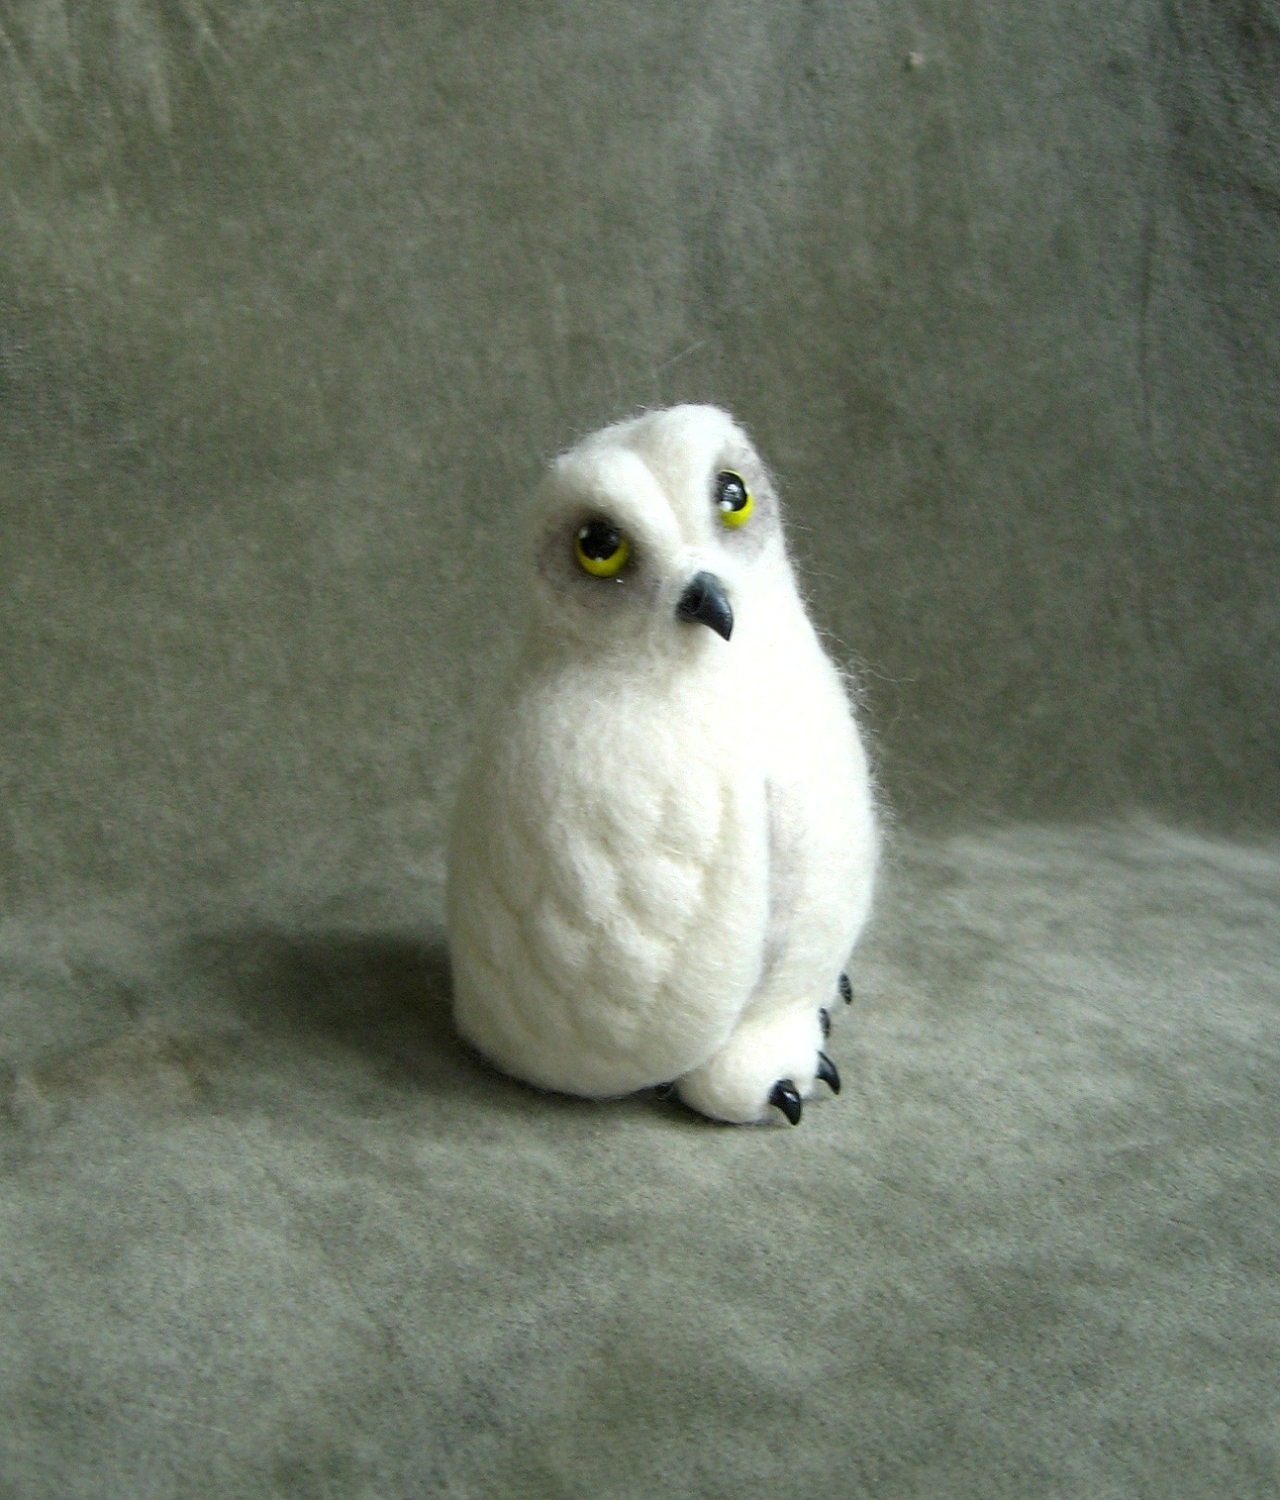 Polar Owl